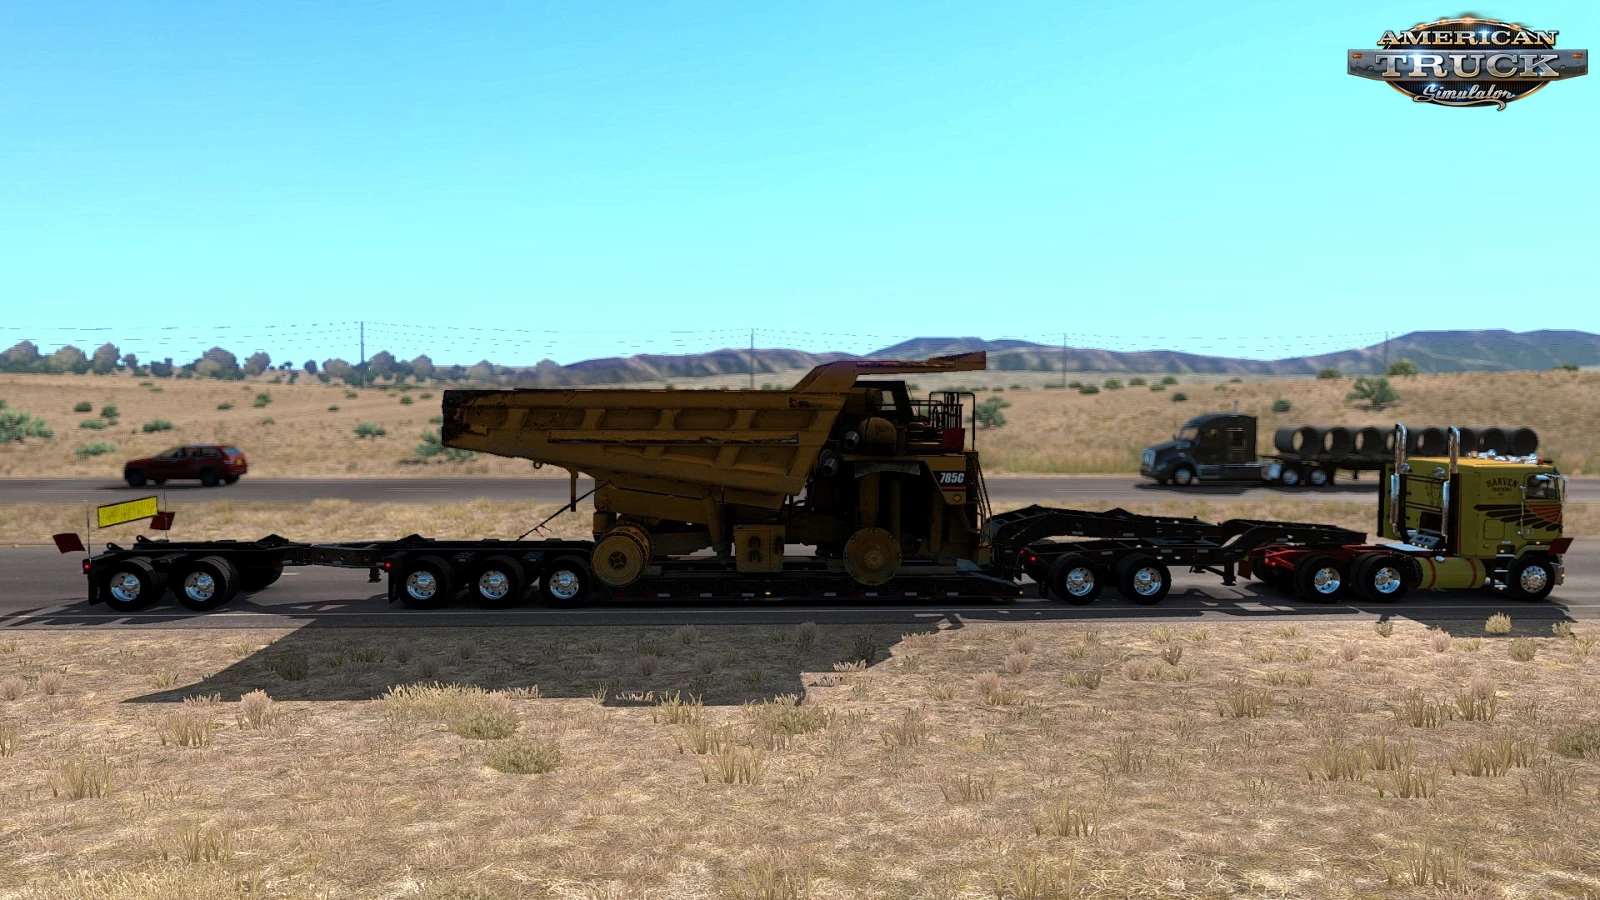 Caterpillar 785C Mining Truck for Heavy Cargo Pack DLC v1.5 (1.45.x)